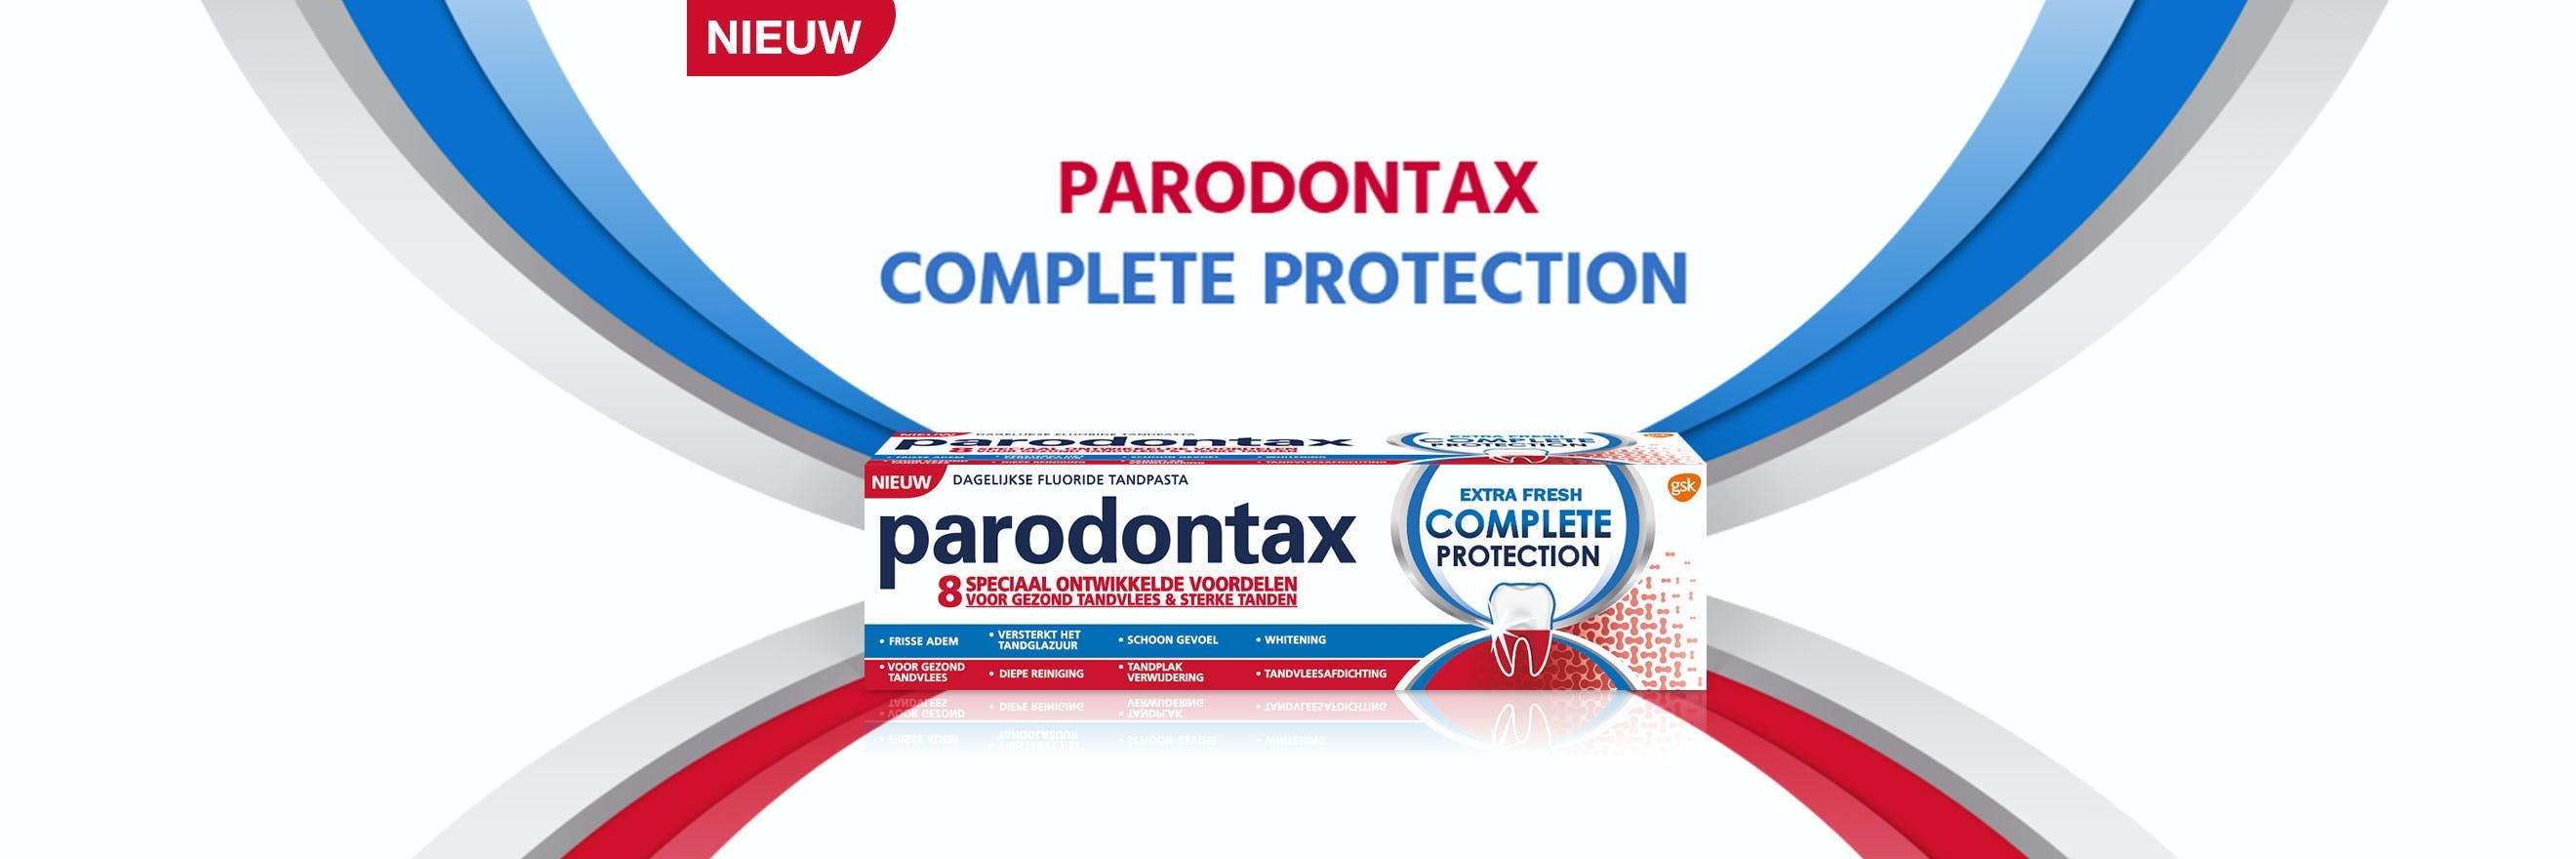 Daily original paradontax tandpasta